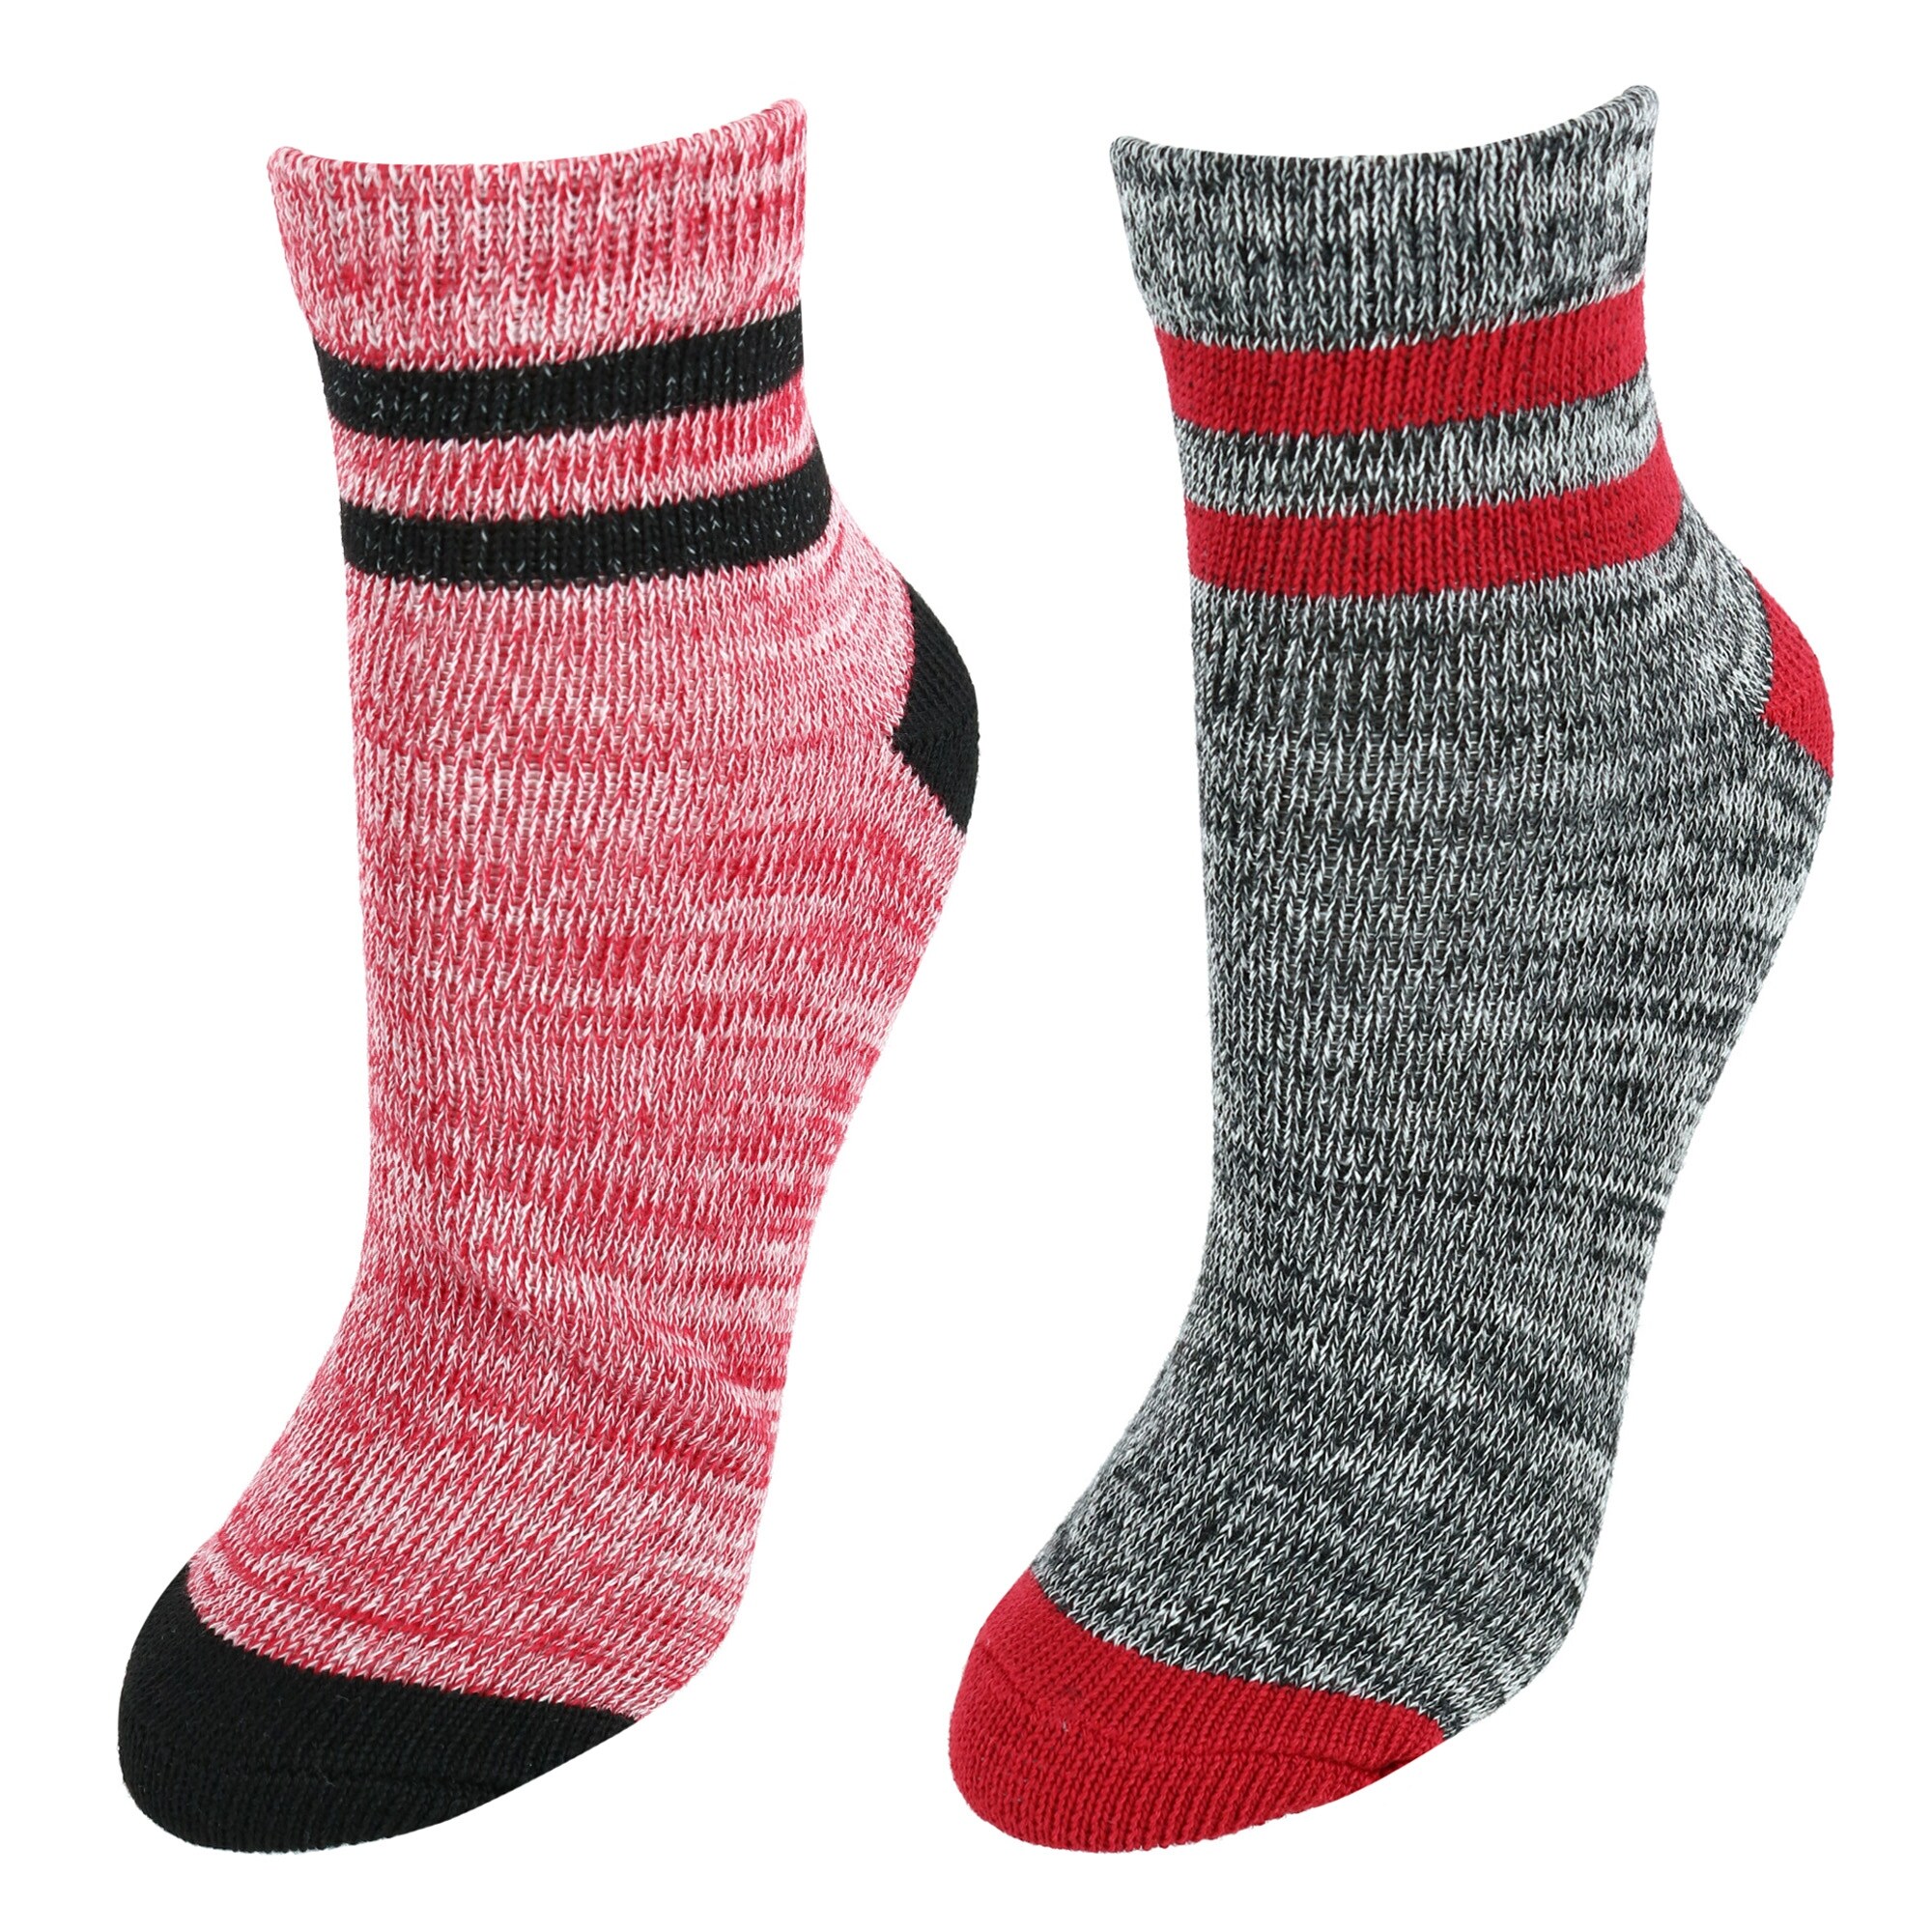 great socks for women